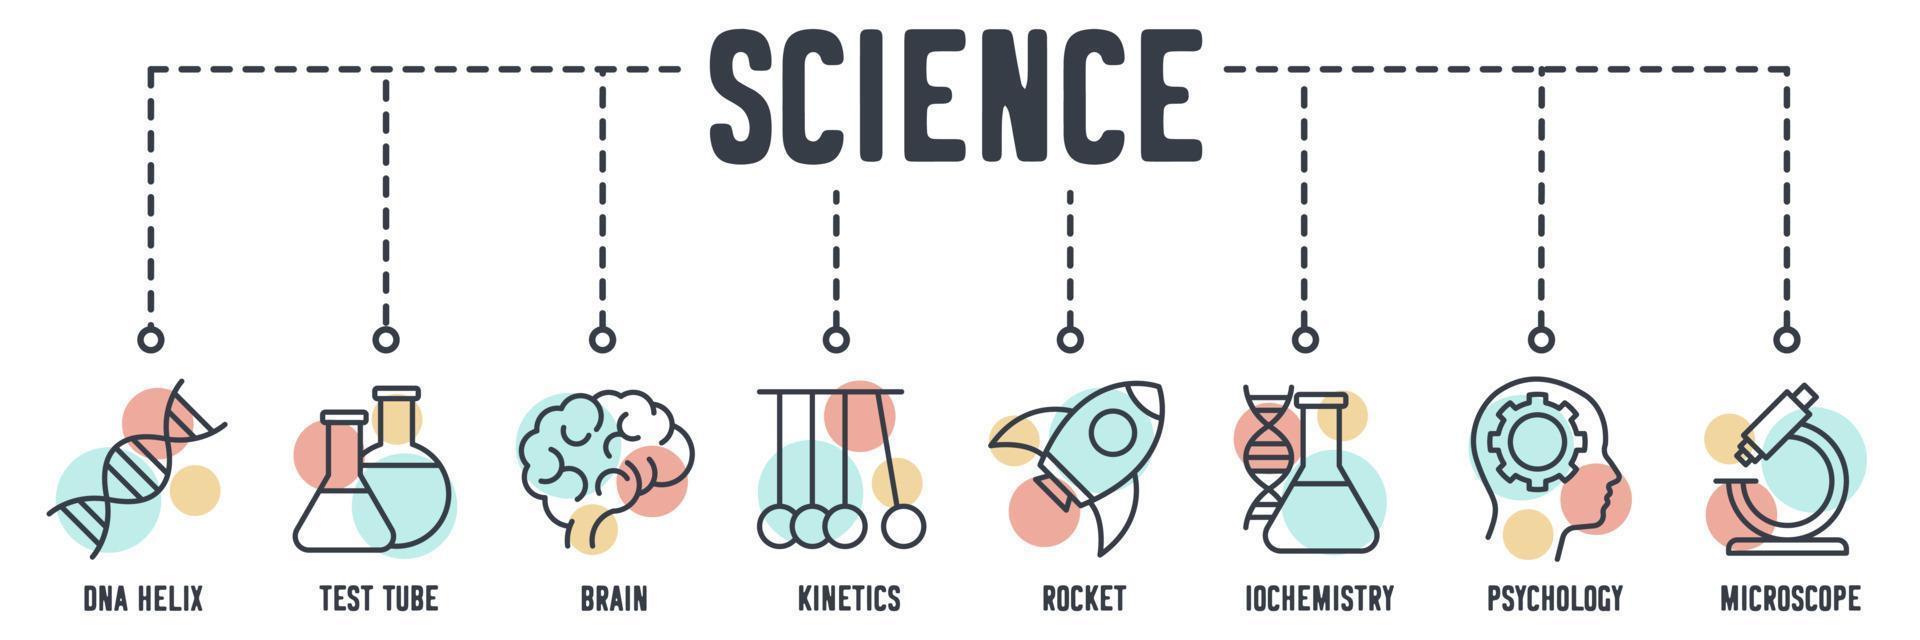 vetenskap banner webbikon. dna helix, kemi, hjärna, kinetik, raket, biokemi, psykologi, mikroskop vektor illustration koncept.